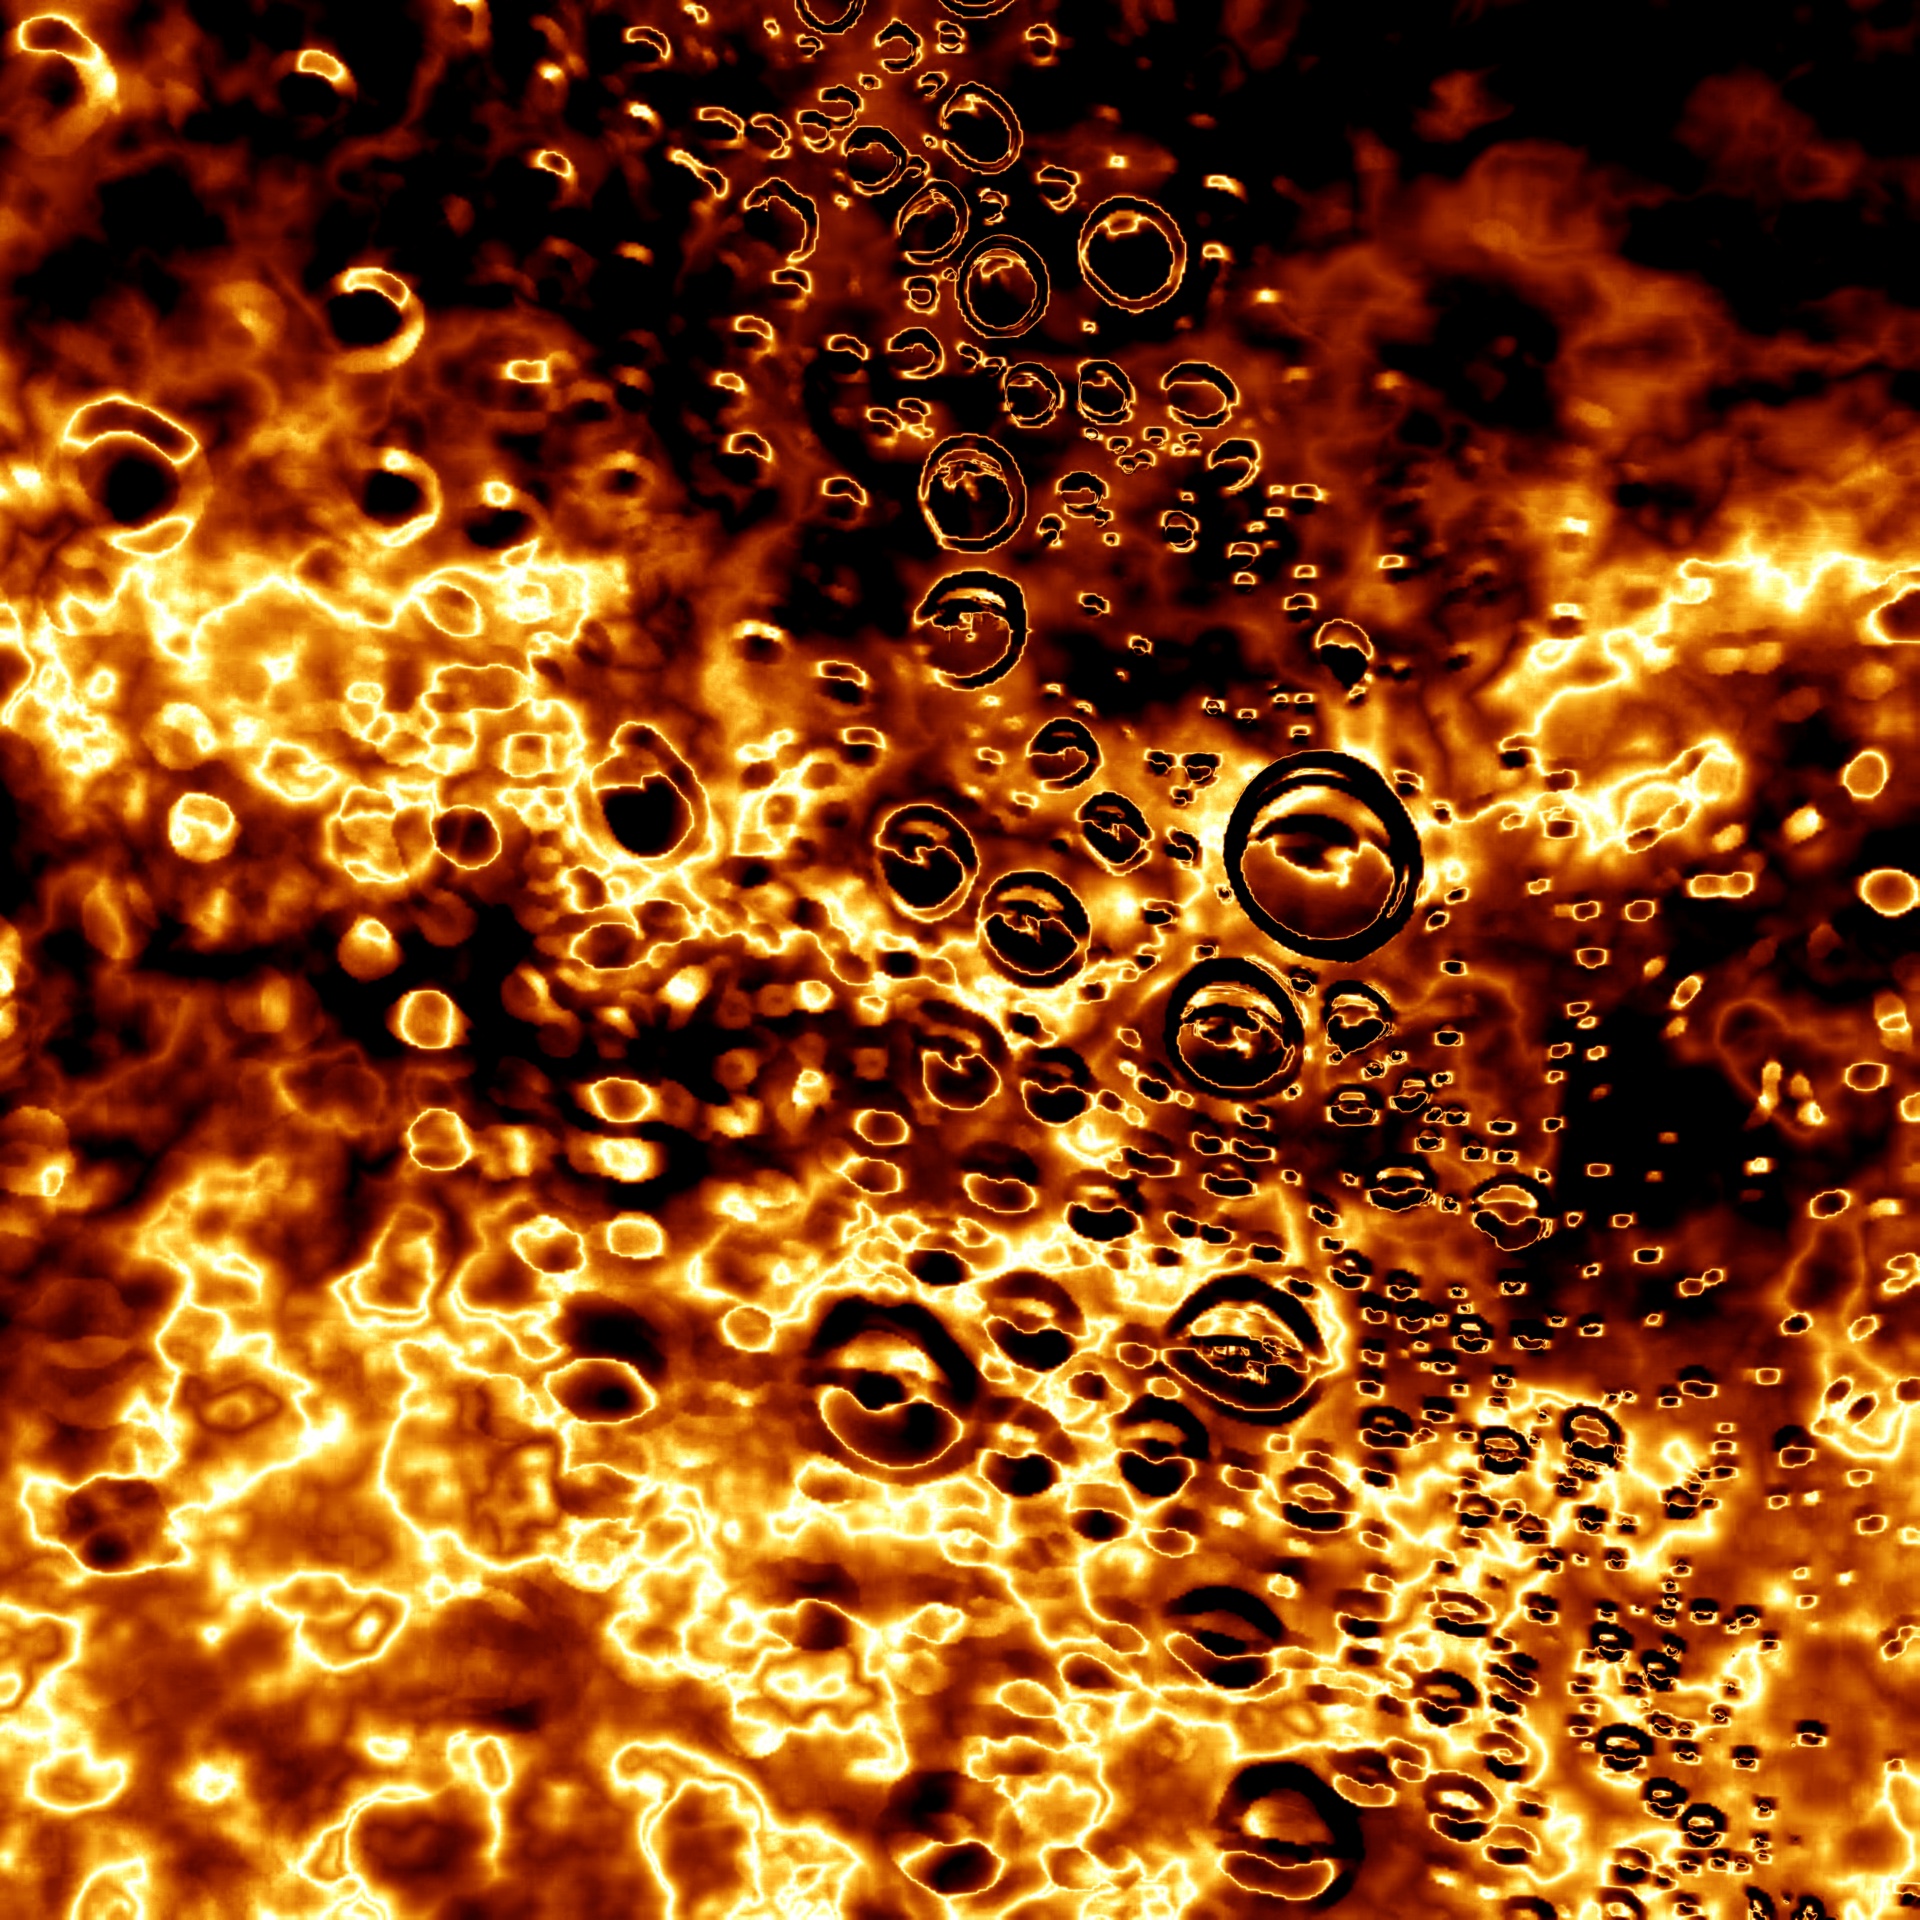 Wallpaper Fire Balls Backdrop Background Image From Needpix